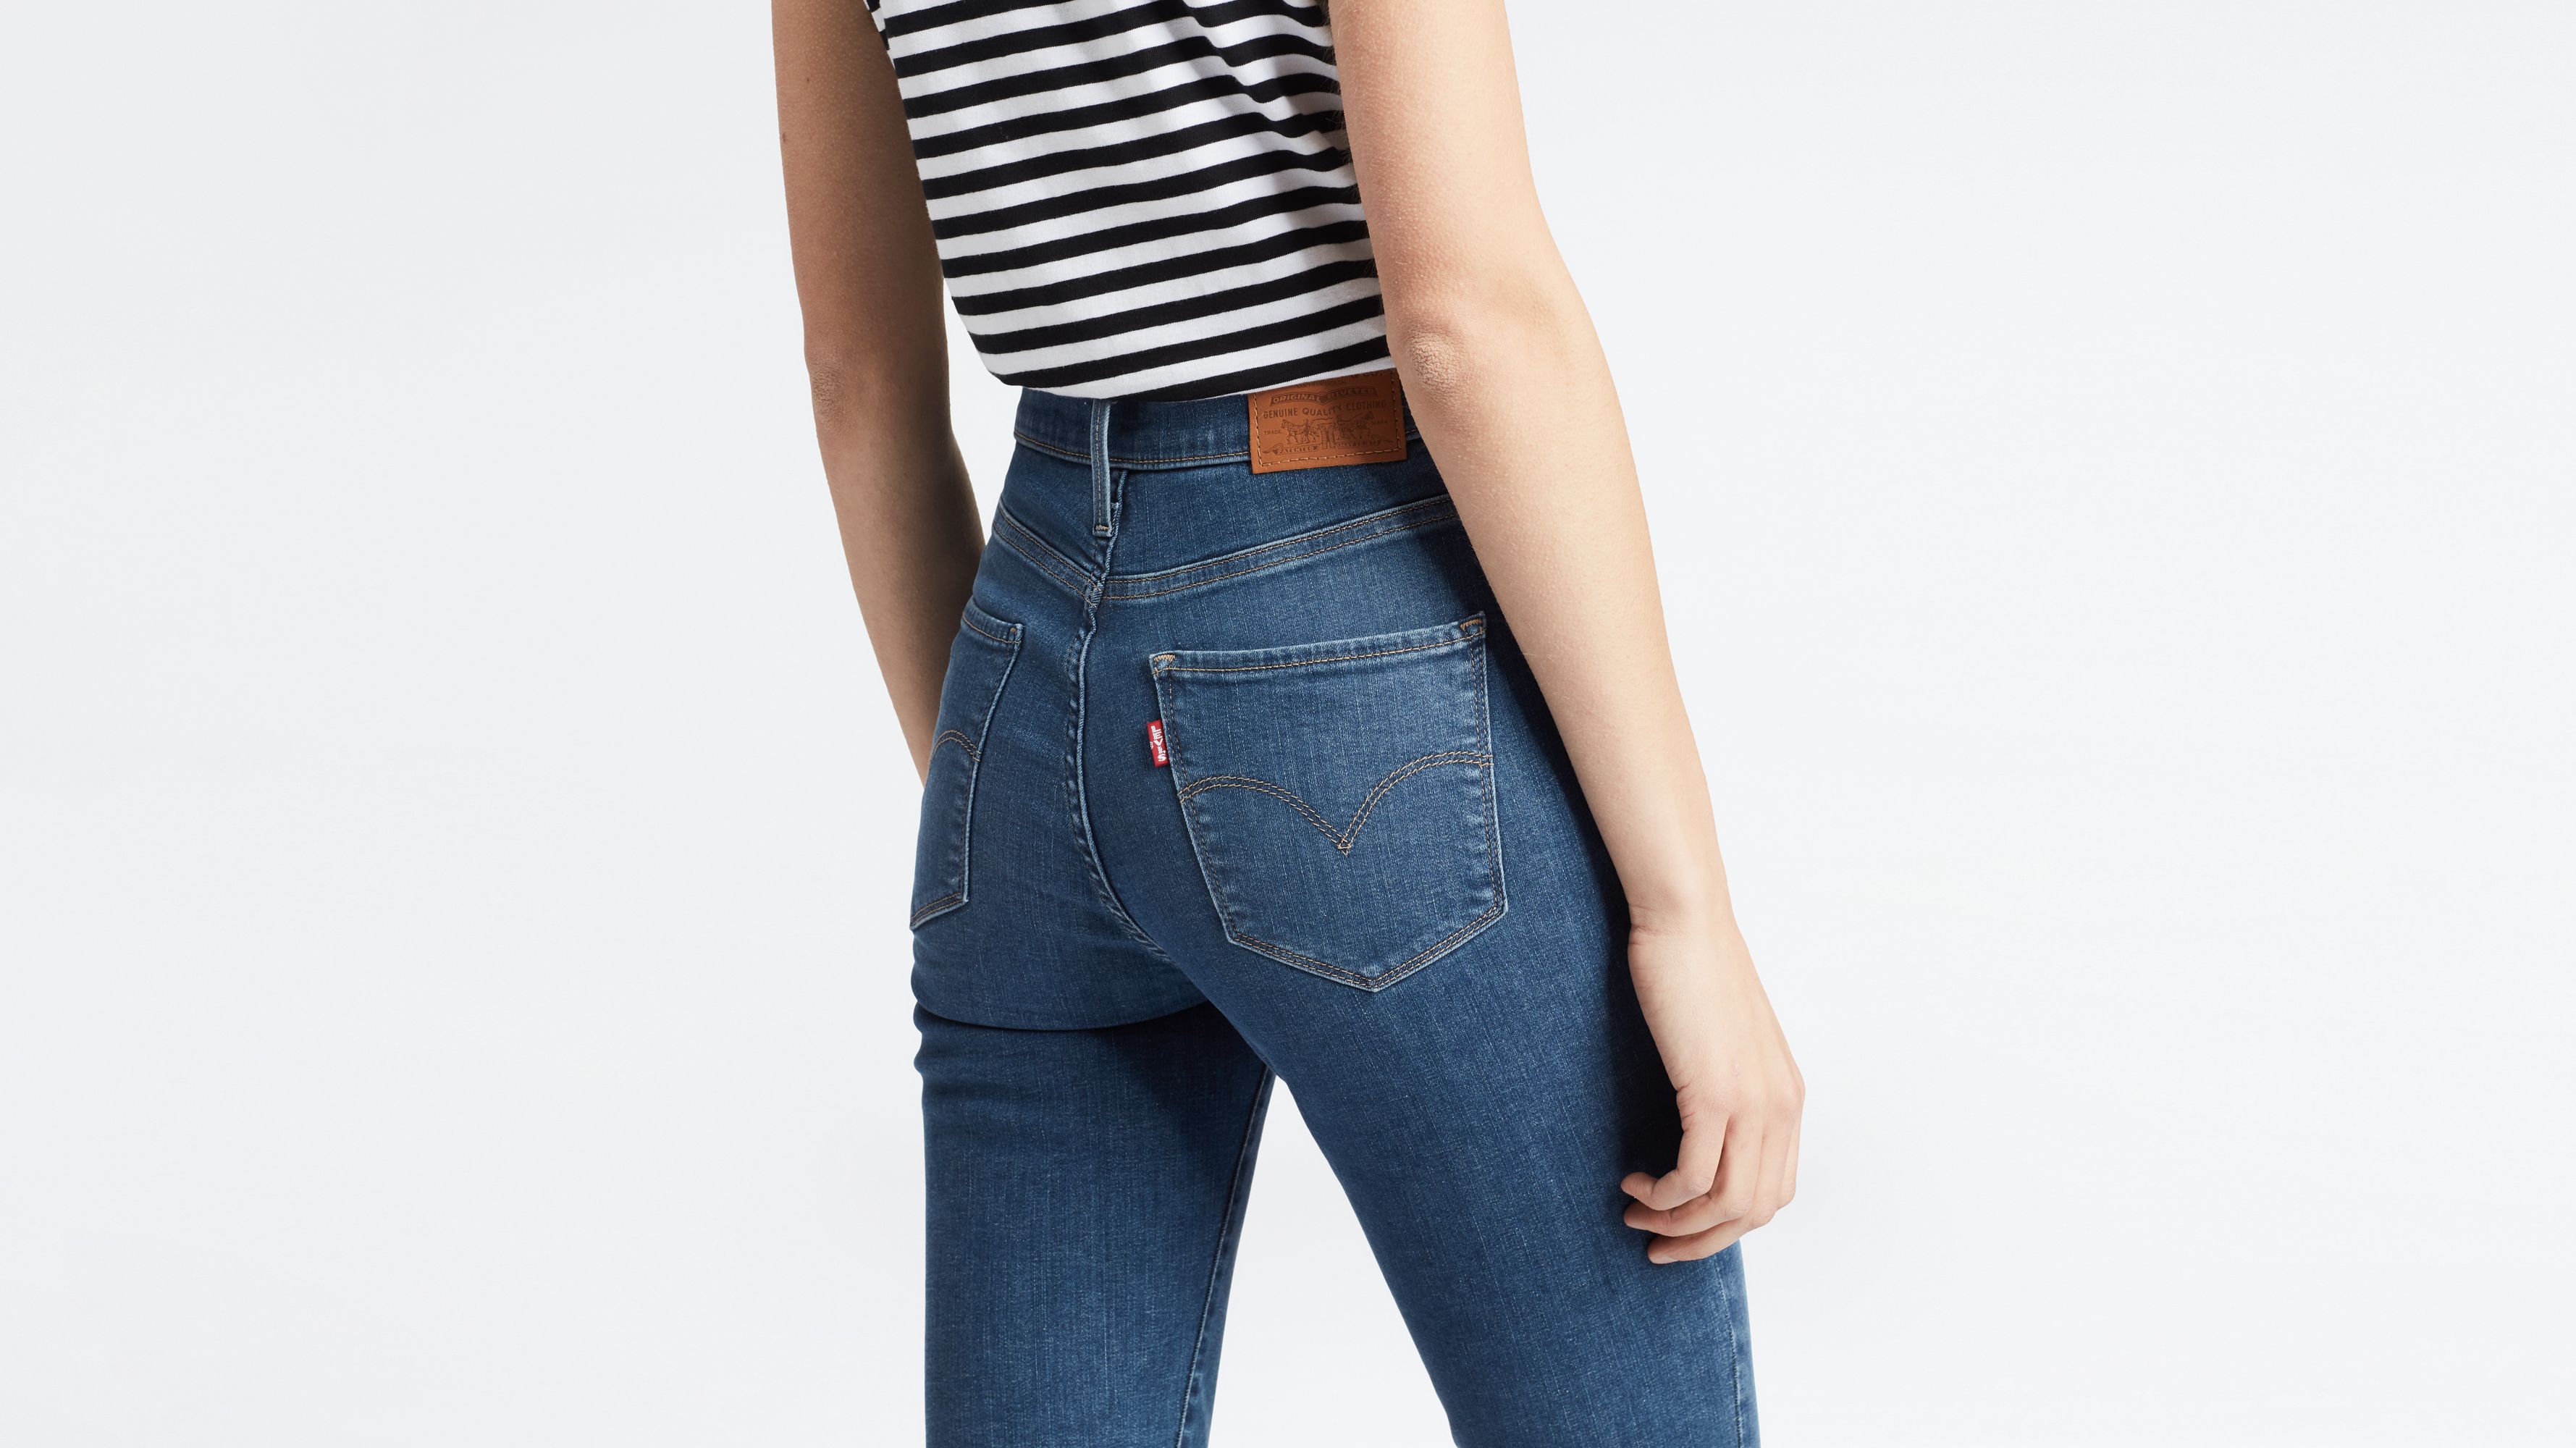 levis jeans high waist skinny